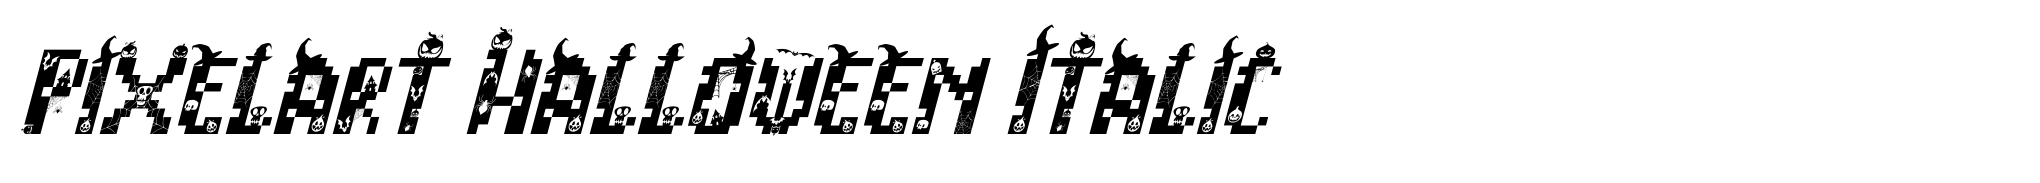 Pixelart Halloween Italic image